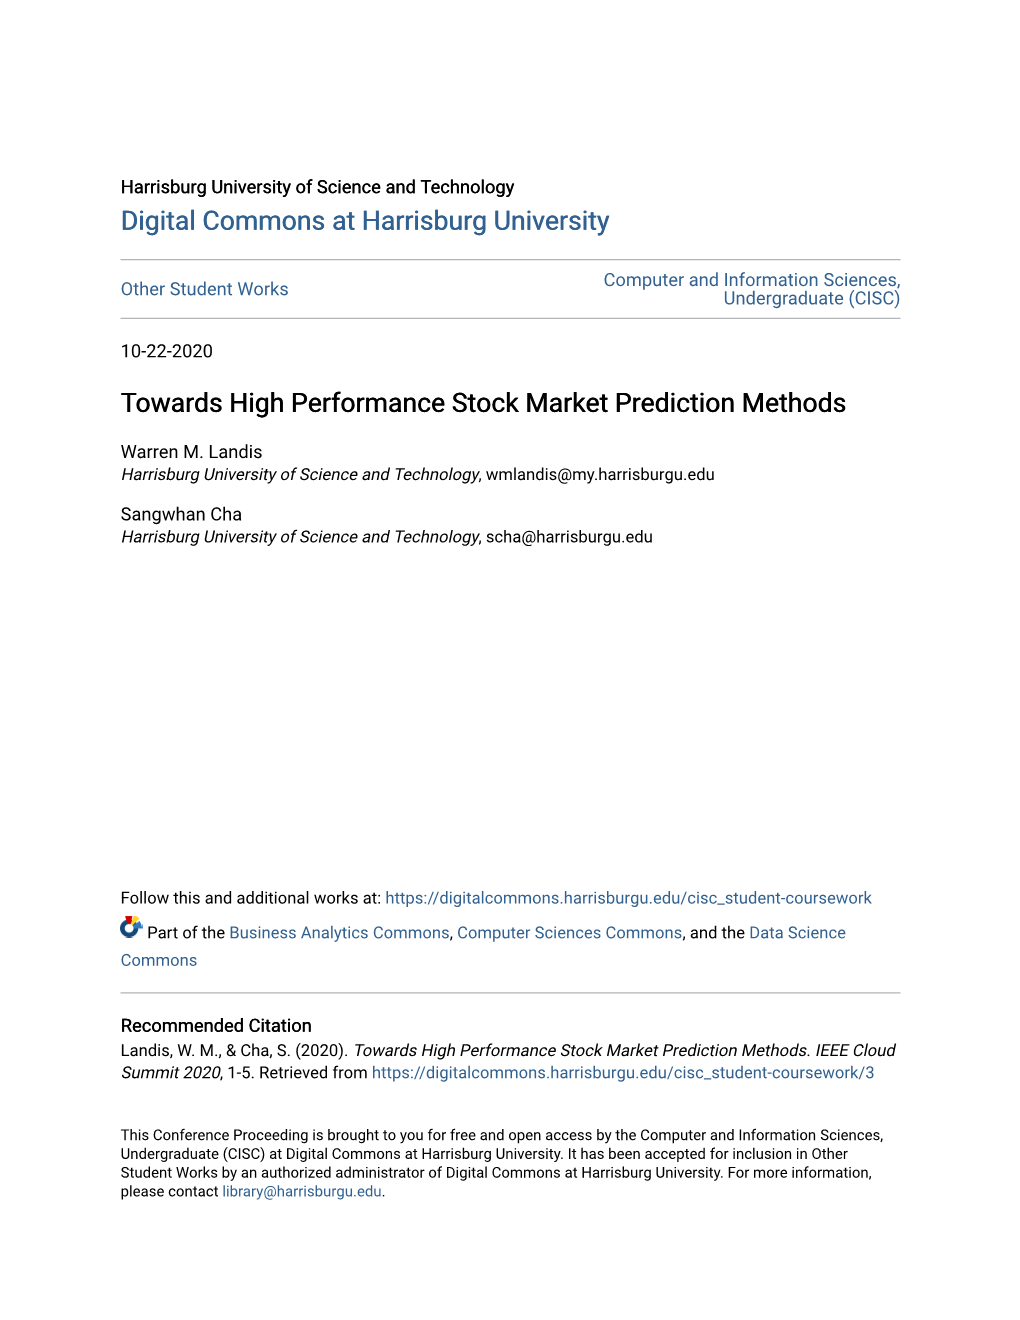 Towards High Performance Stock Market Prediction Methods